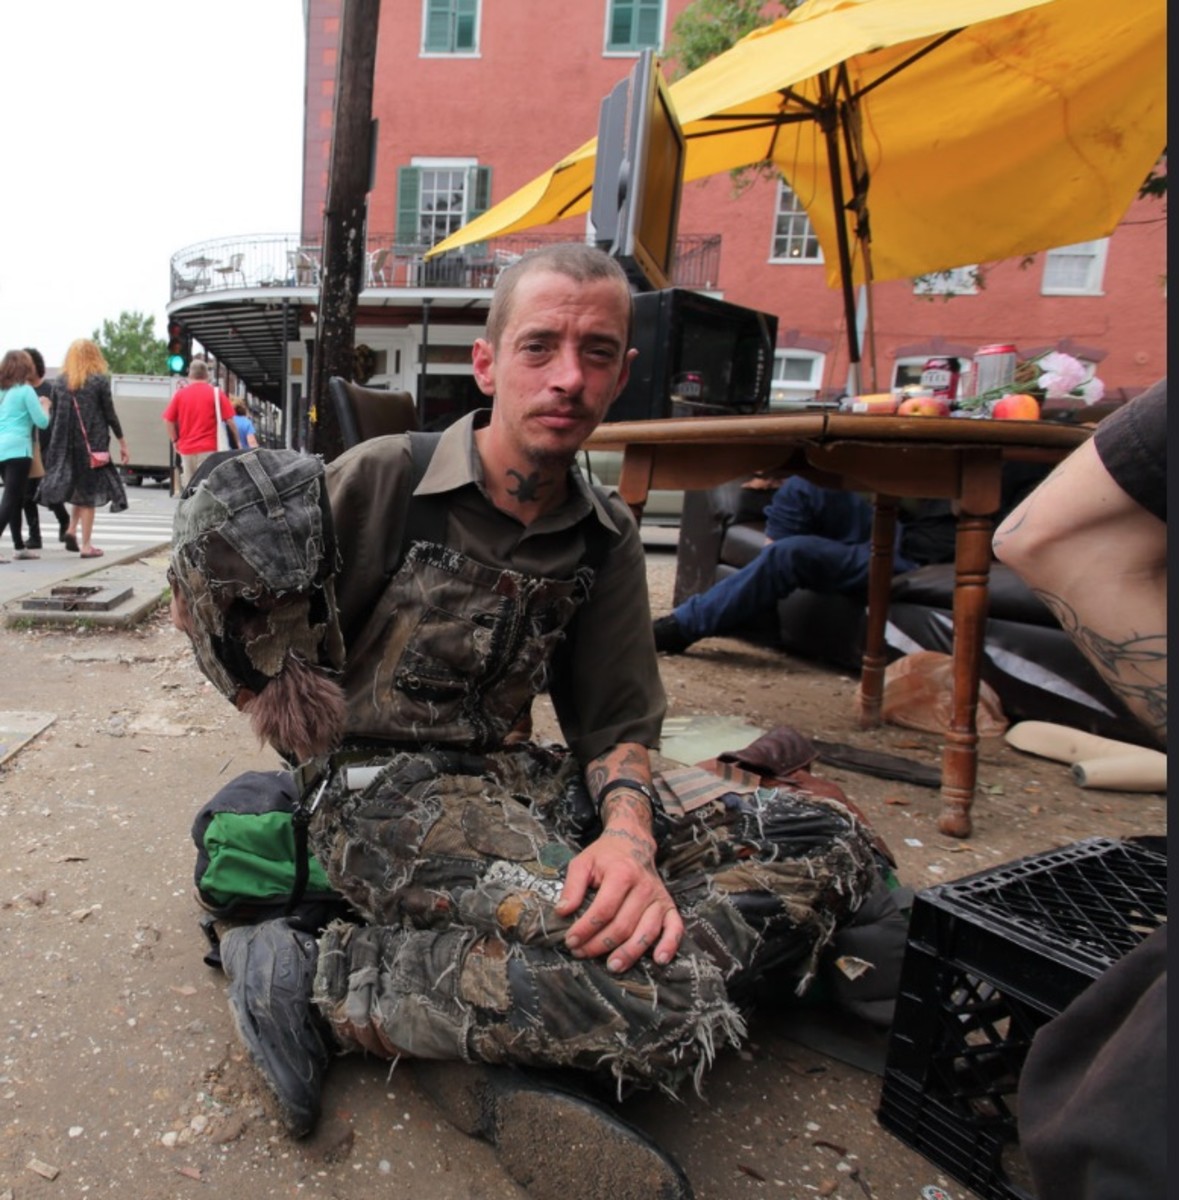 Homeless veteran in New Orleans, May 2016